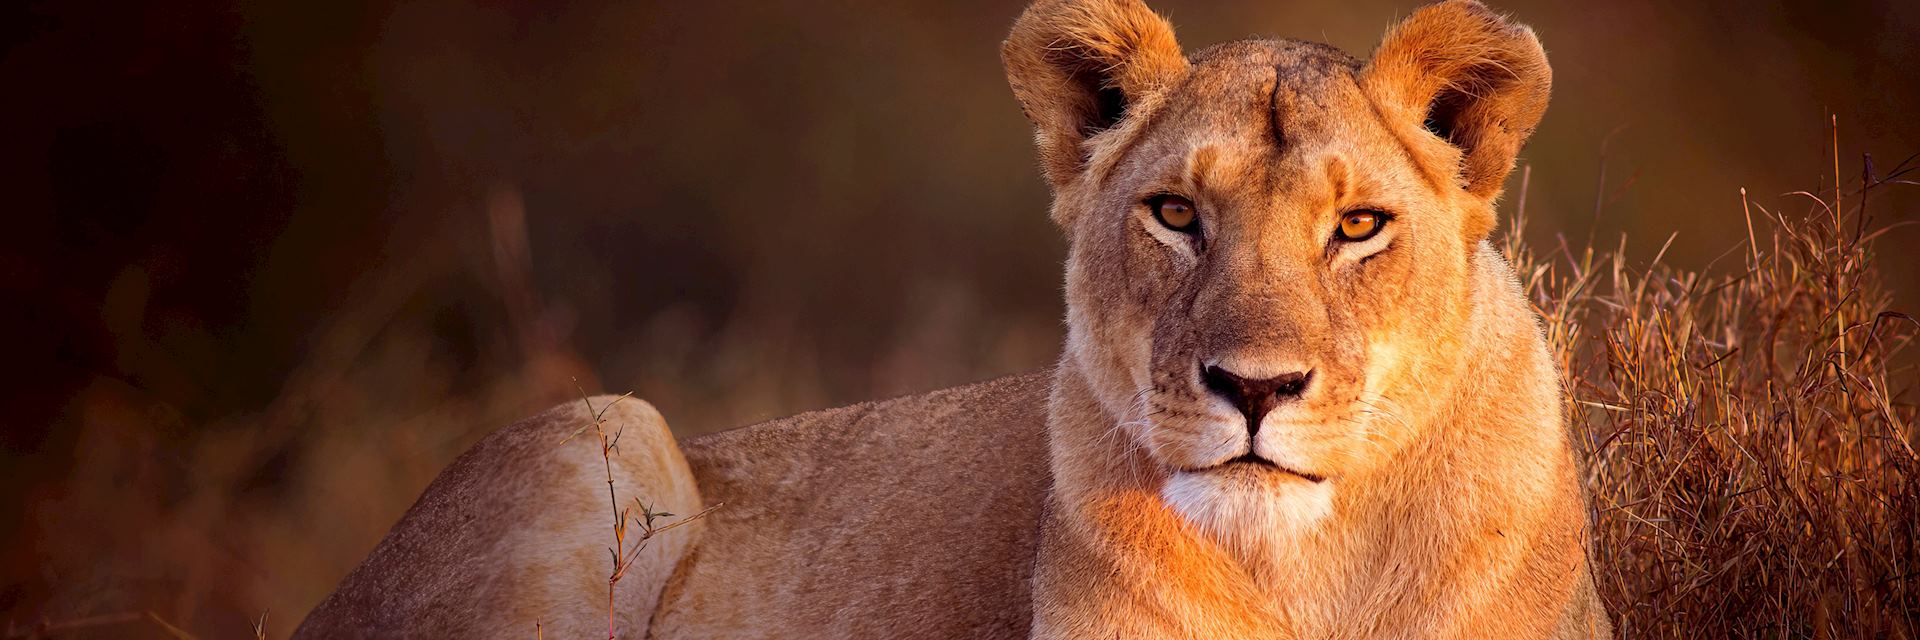 Lion, Masai Mara National Reserve, Kenya